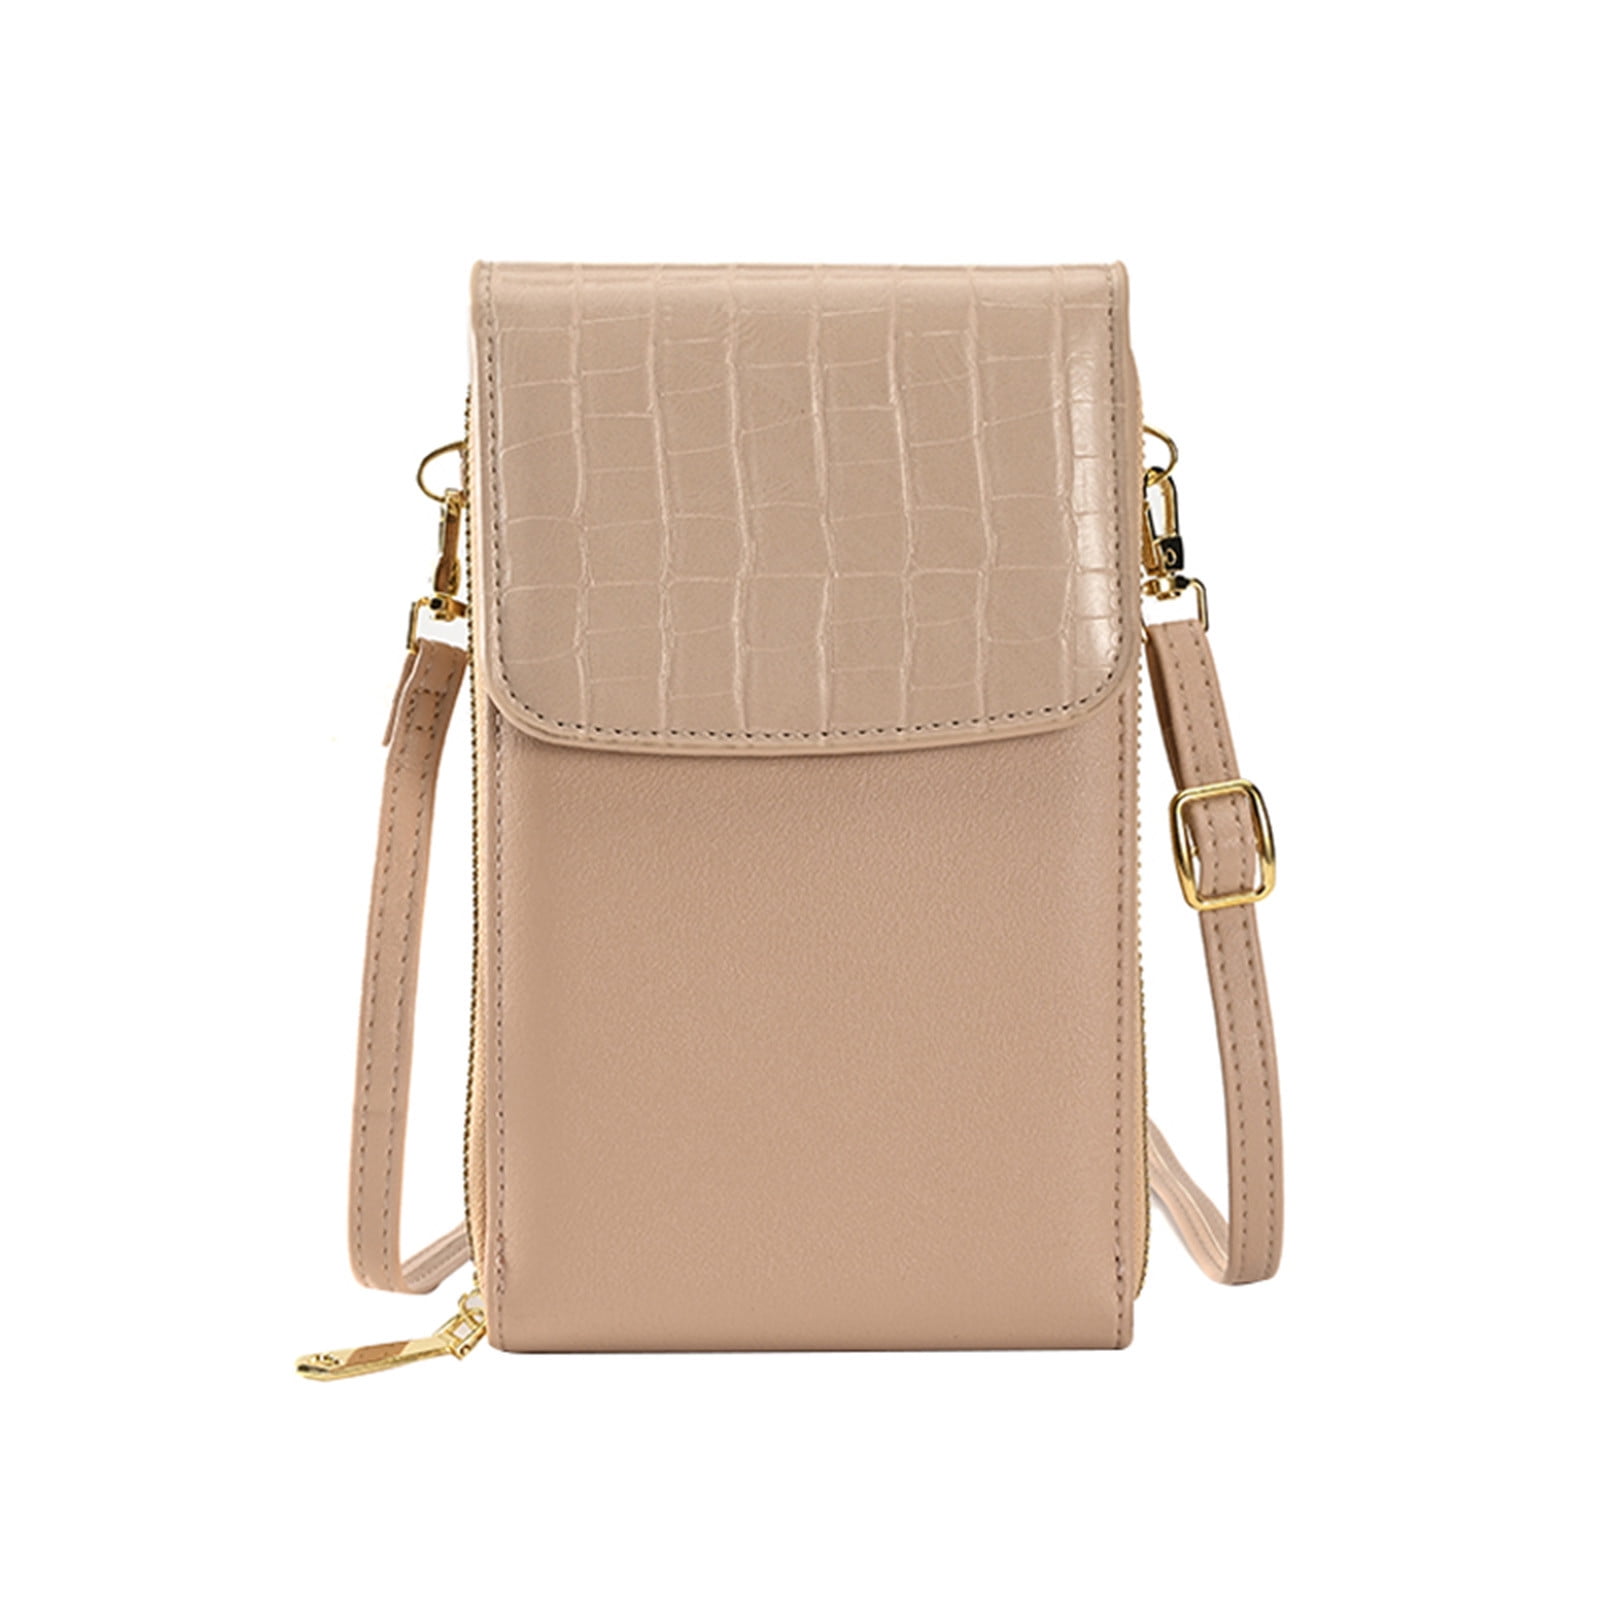 Handbag Bliss Vera Pelle Soft Italian Leather SMALL Cross Body Messenger  Handbag Shoulder Bag